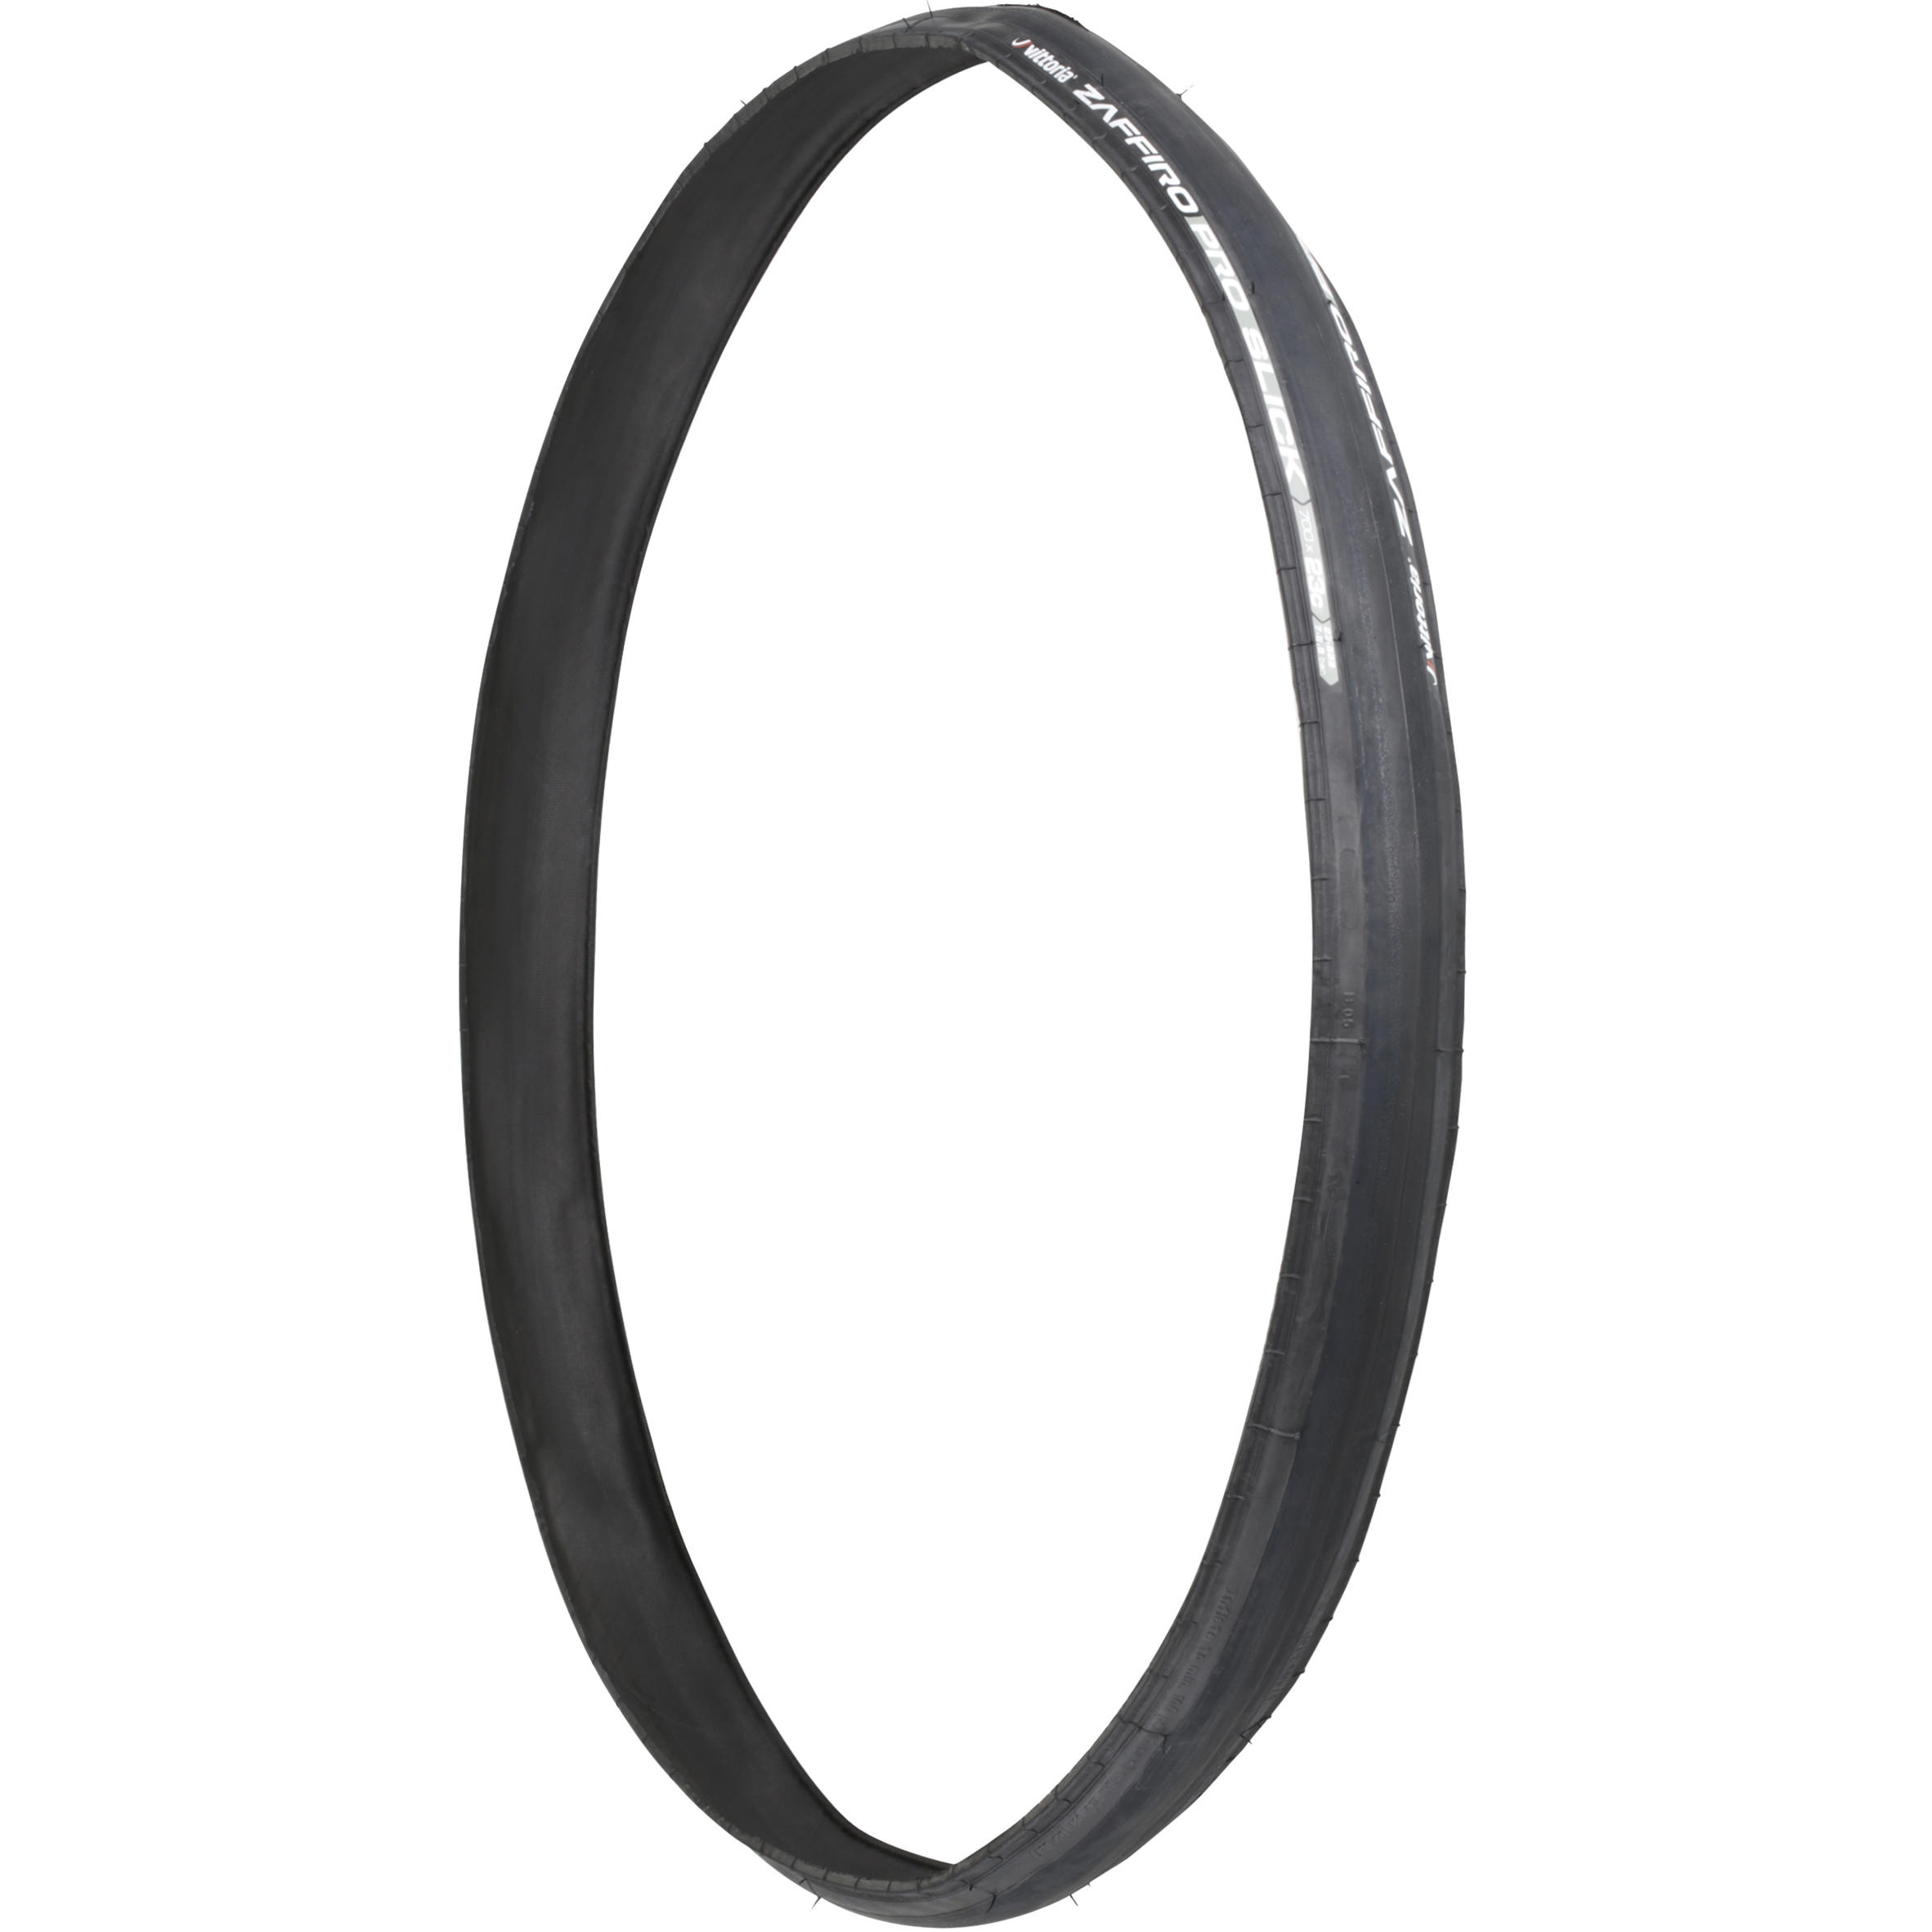 Zaffiro Pro Slick Road Tyre - 700x23 4/4